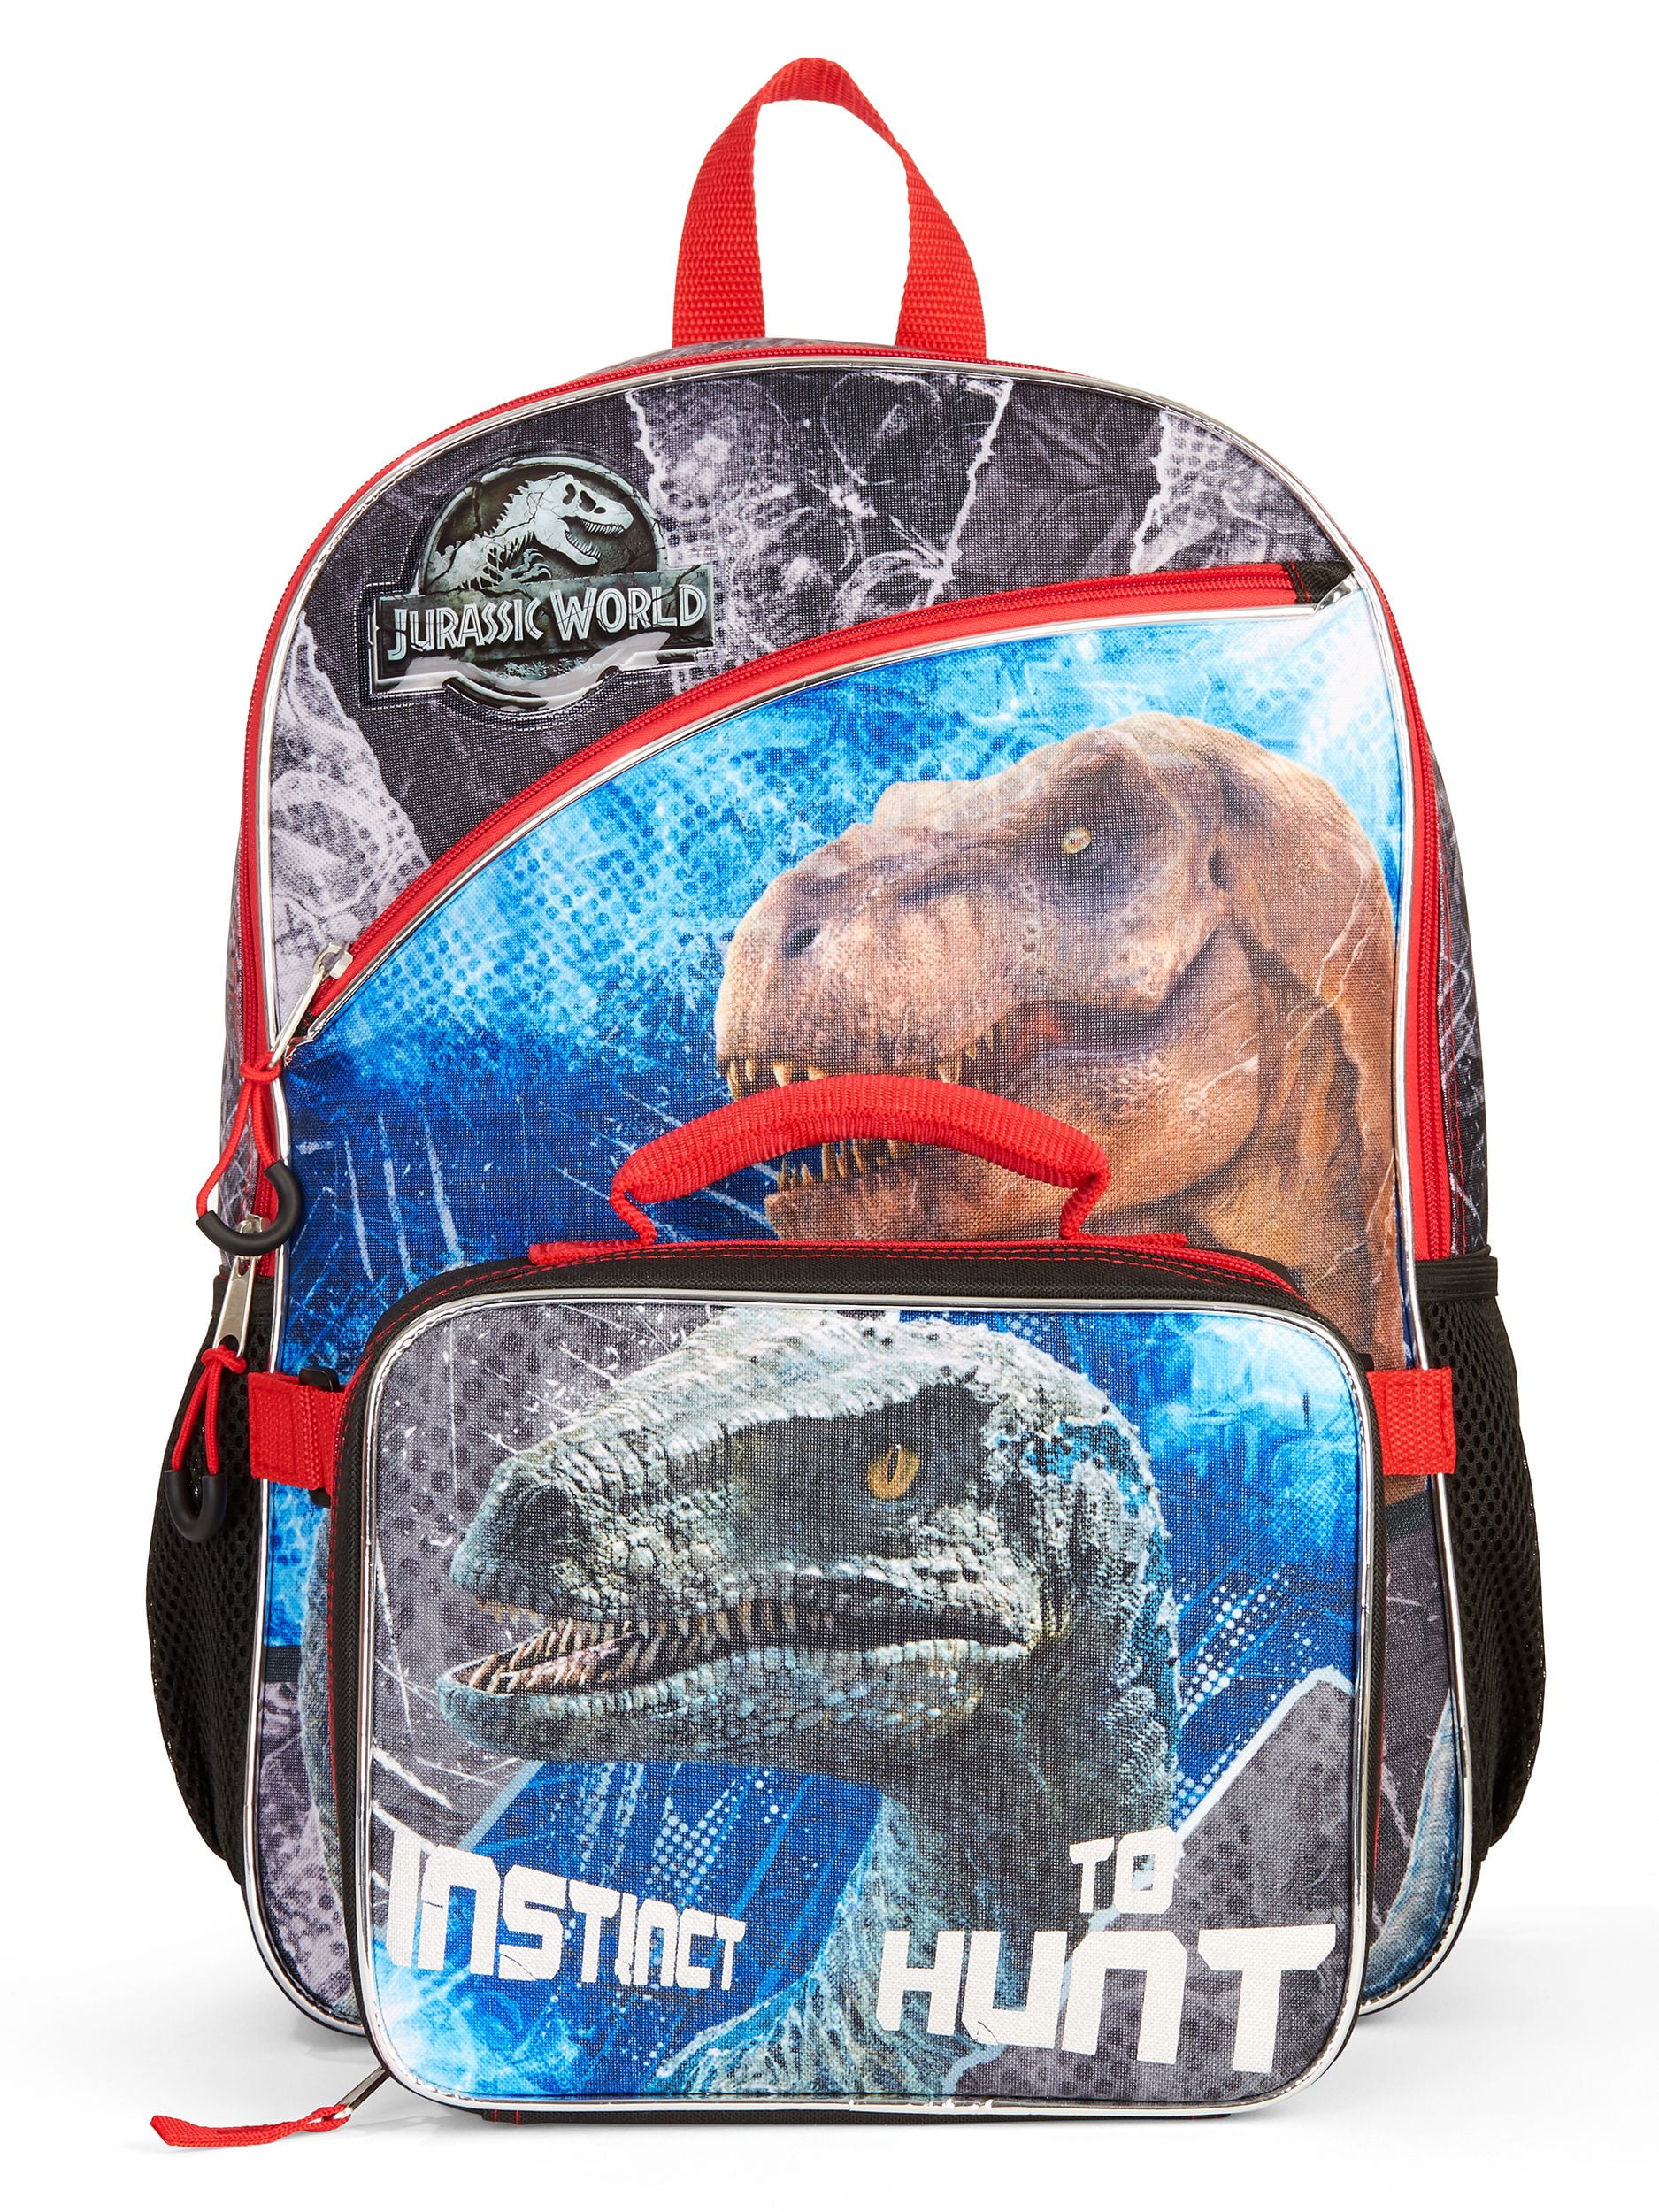 2020 Jurassic World Park Dinosaur Backpack School Bag Travel Camping Rucksack